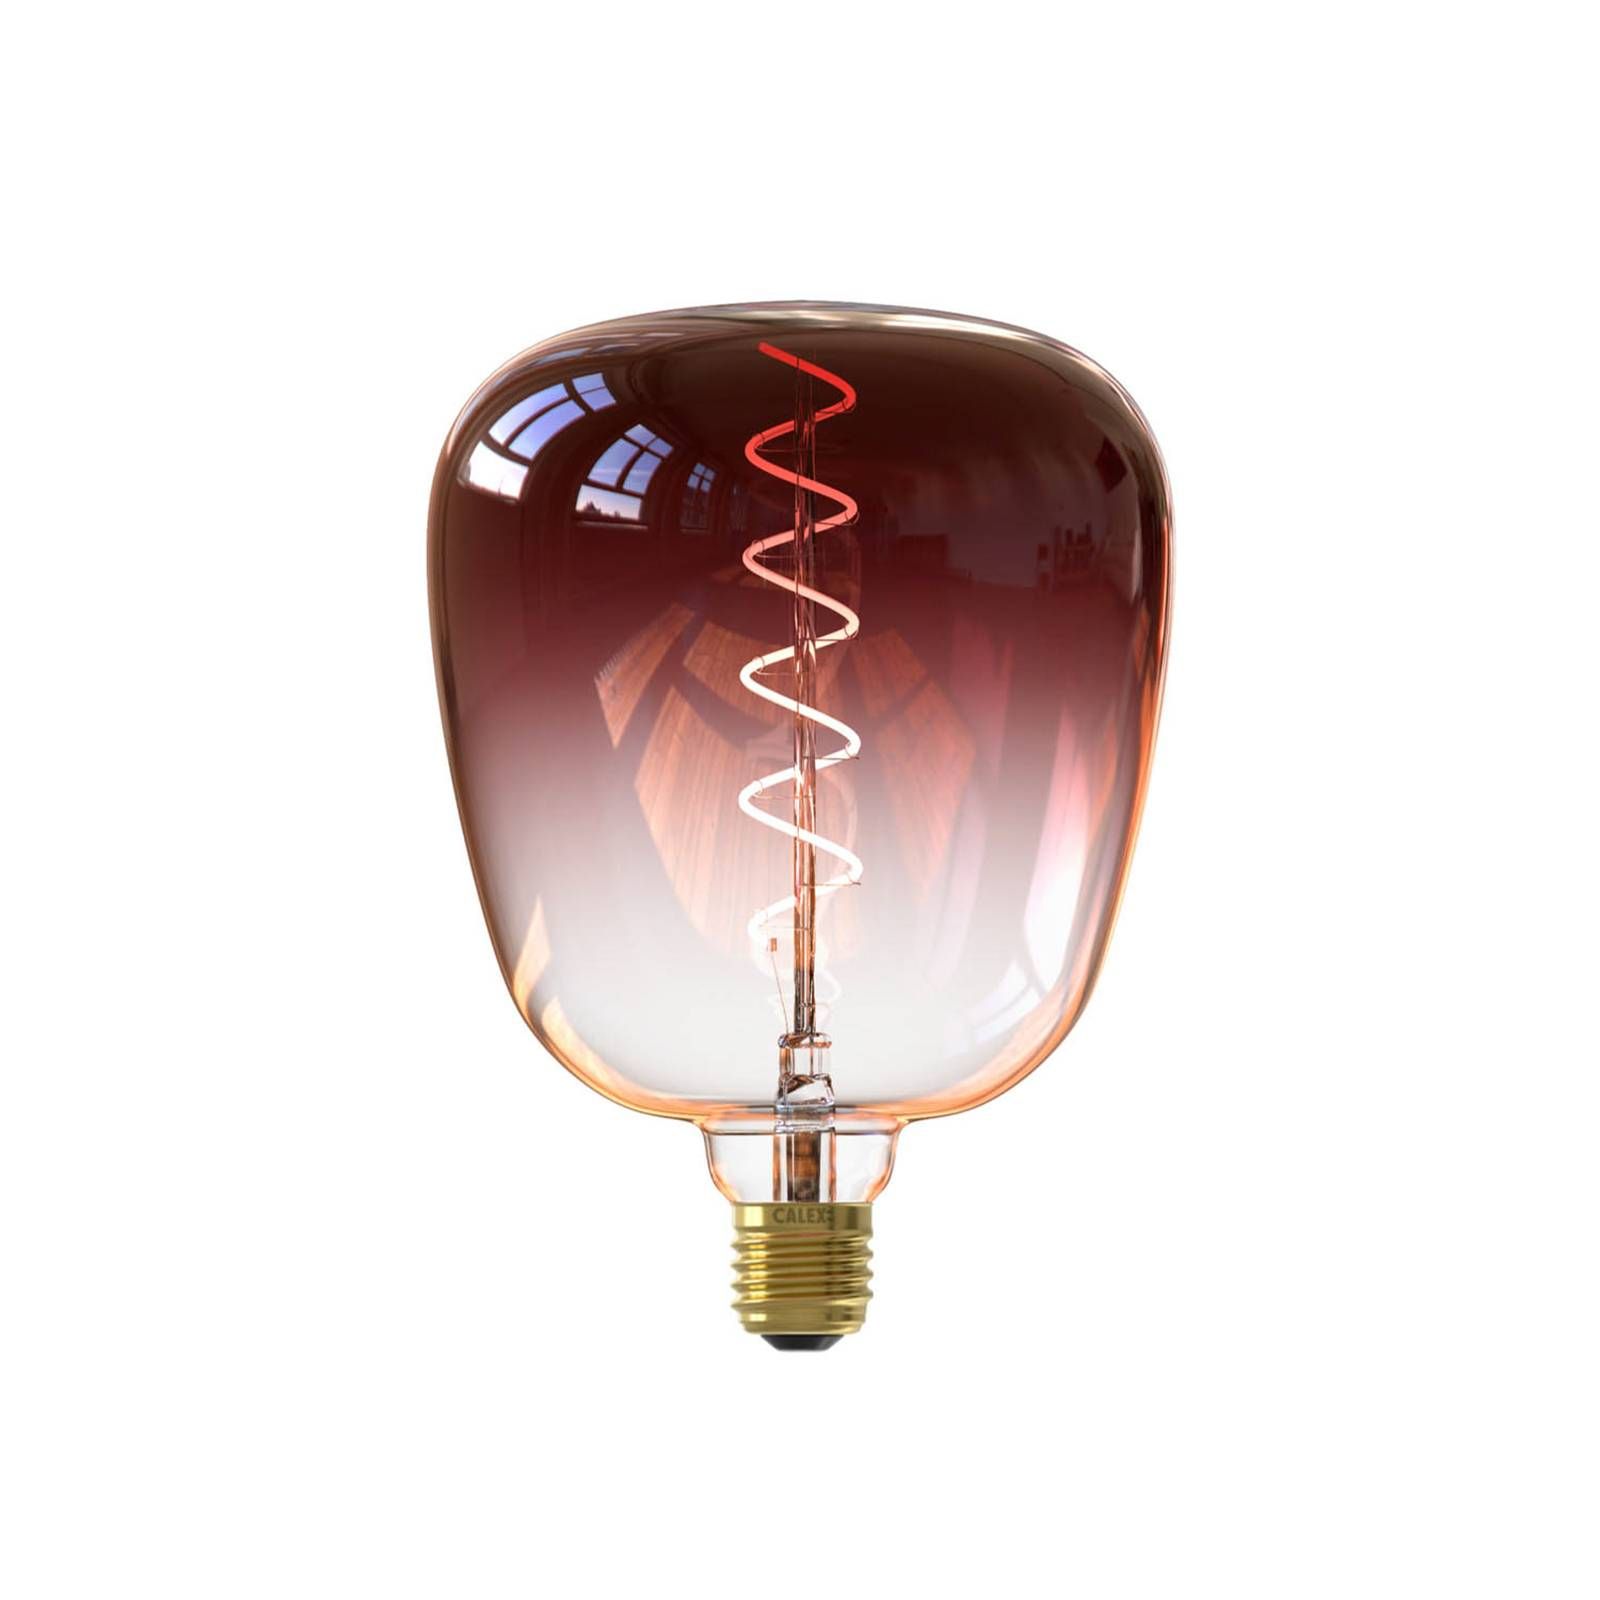 Calex Kiruna LED žiarovka E27 5W filament gaštan, sklo, E27, 5W, P: 20 cm